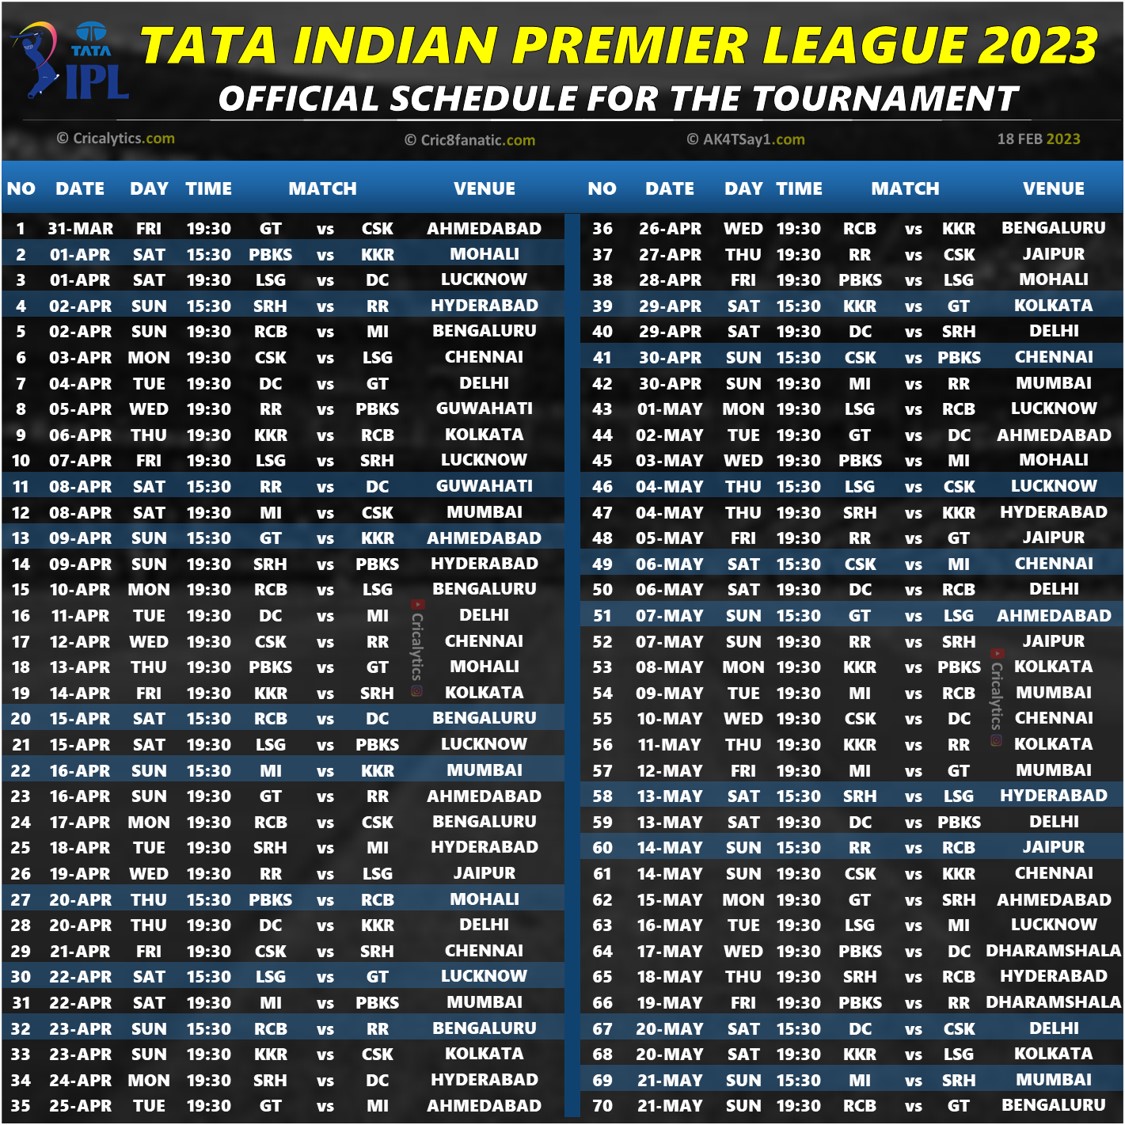 IPL 2023 confirmed official schedule download pdf now